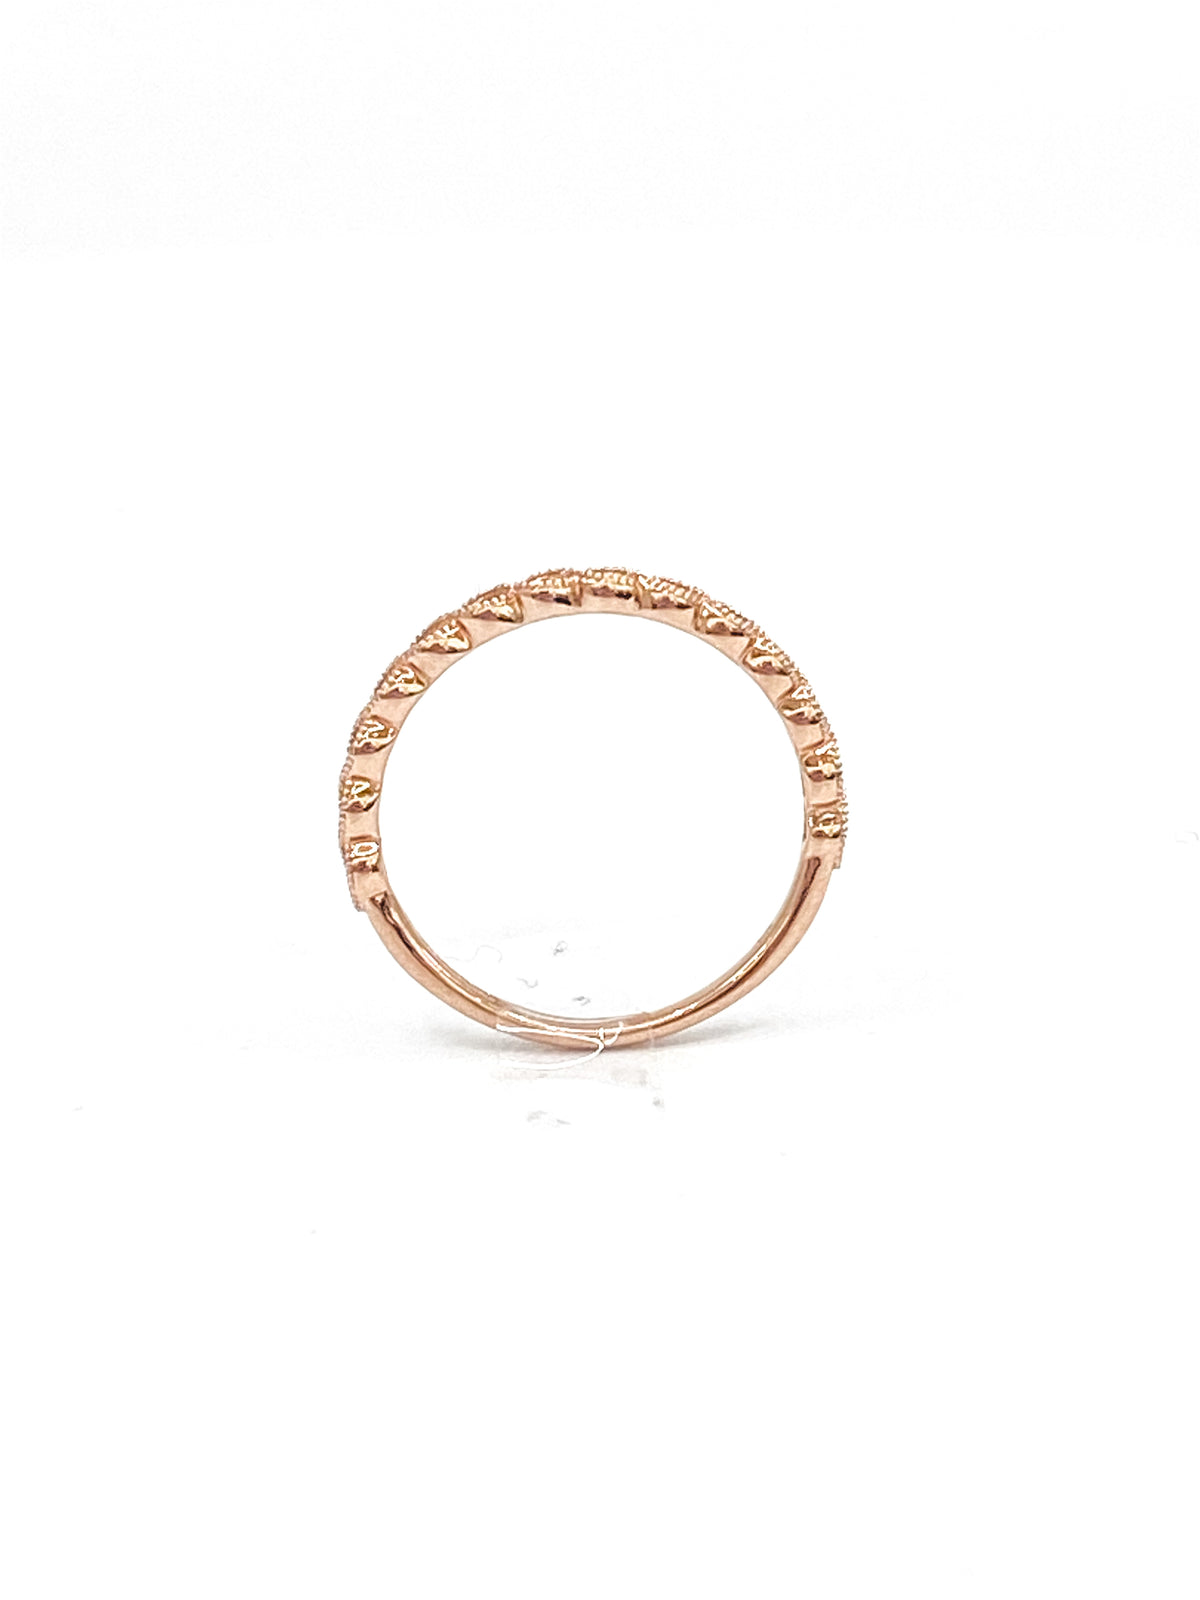 10K Rose Gold 0.07cttw Round Cut Diamond Ring, size 6.5